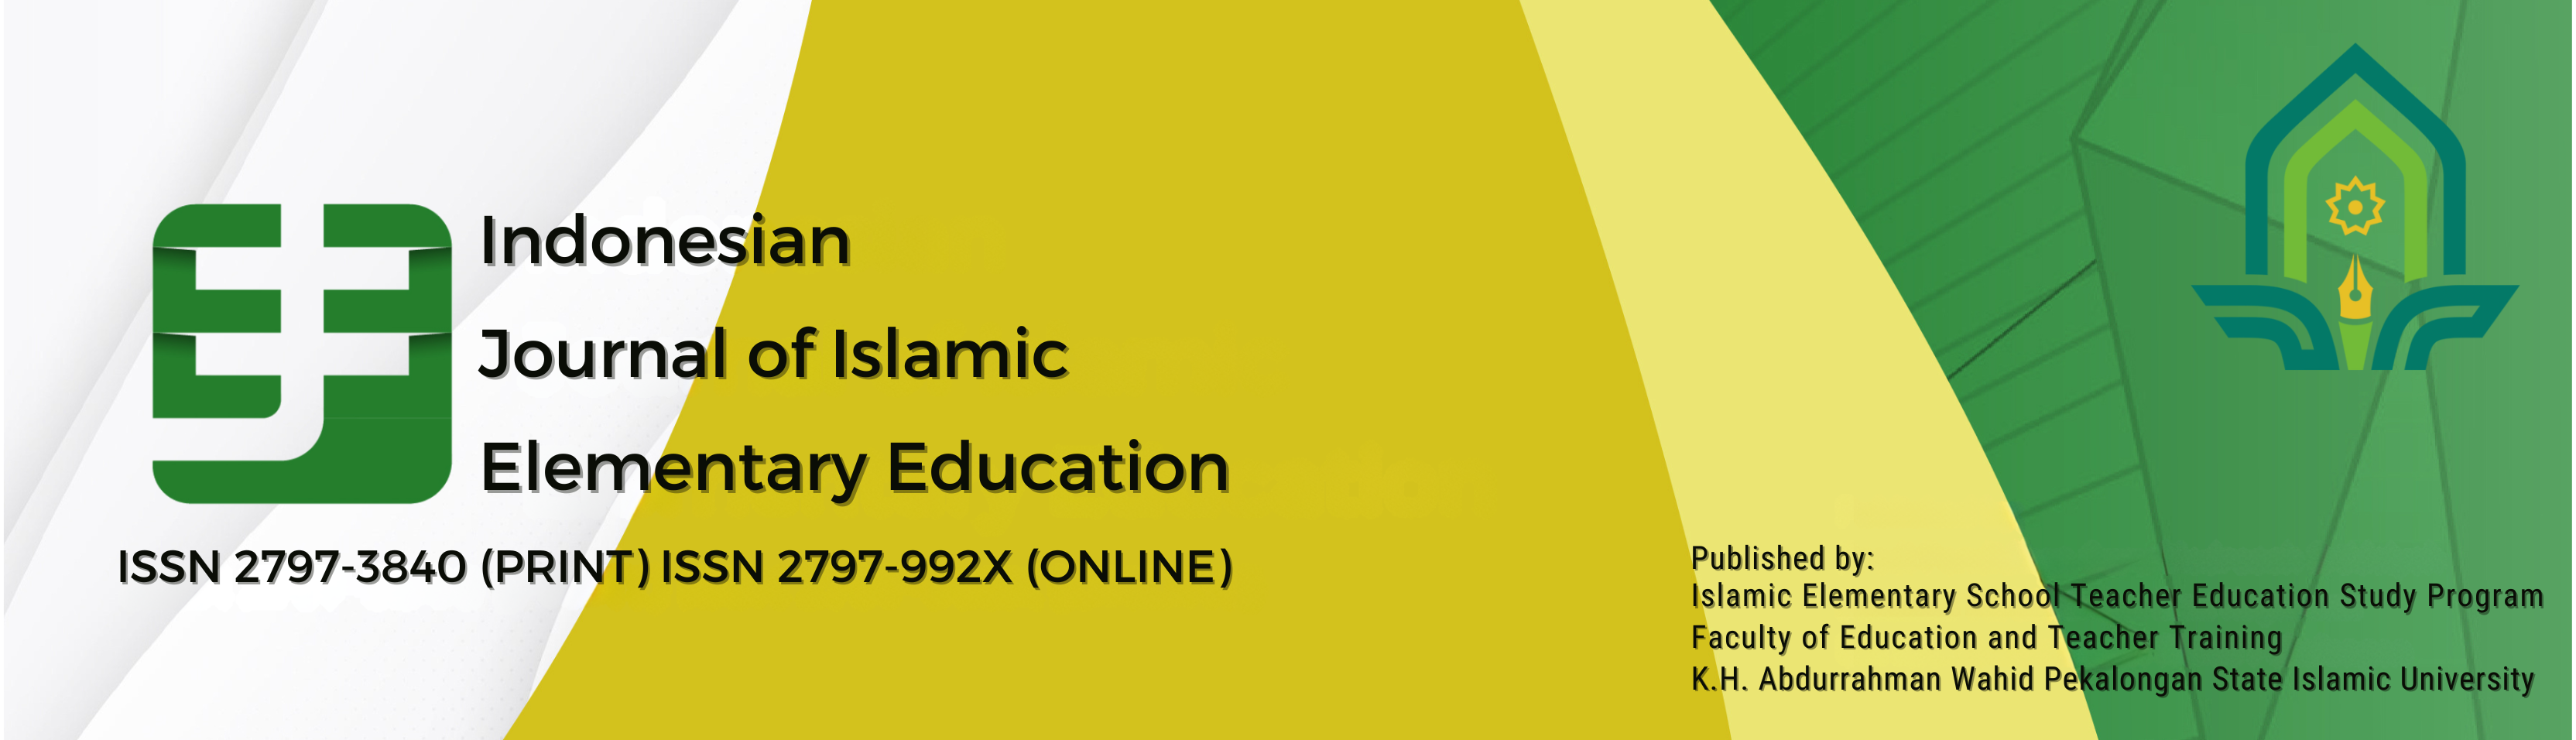 Indonesian Journal of Islamic Elementary Education